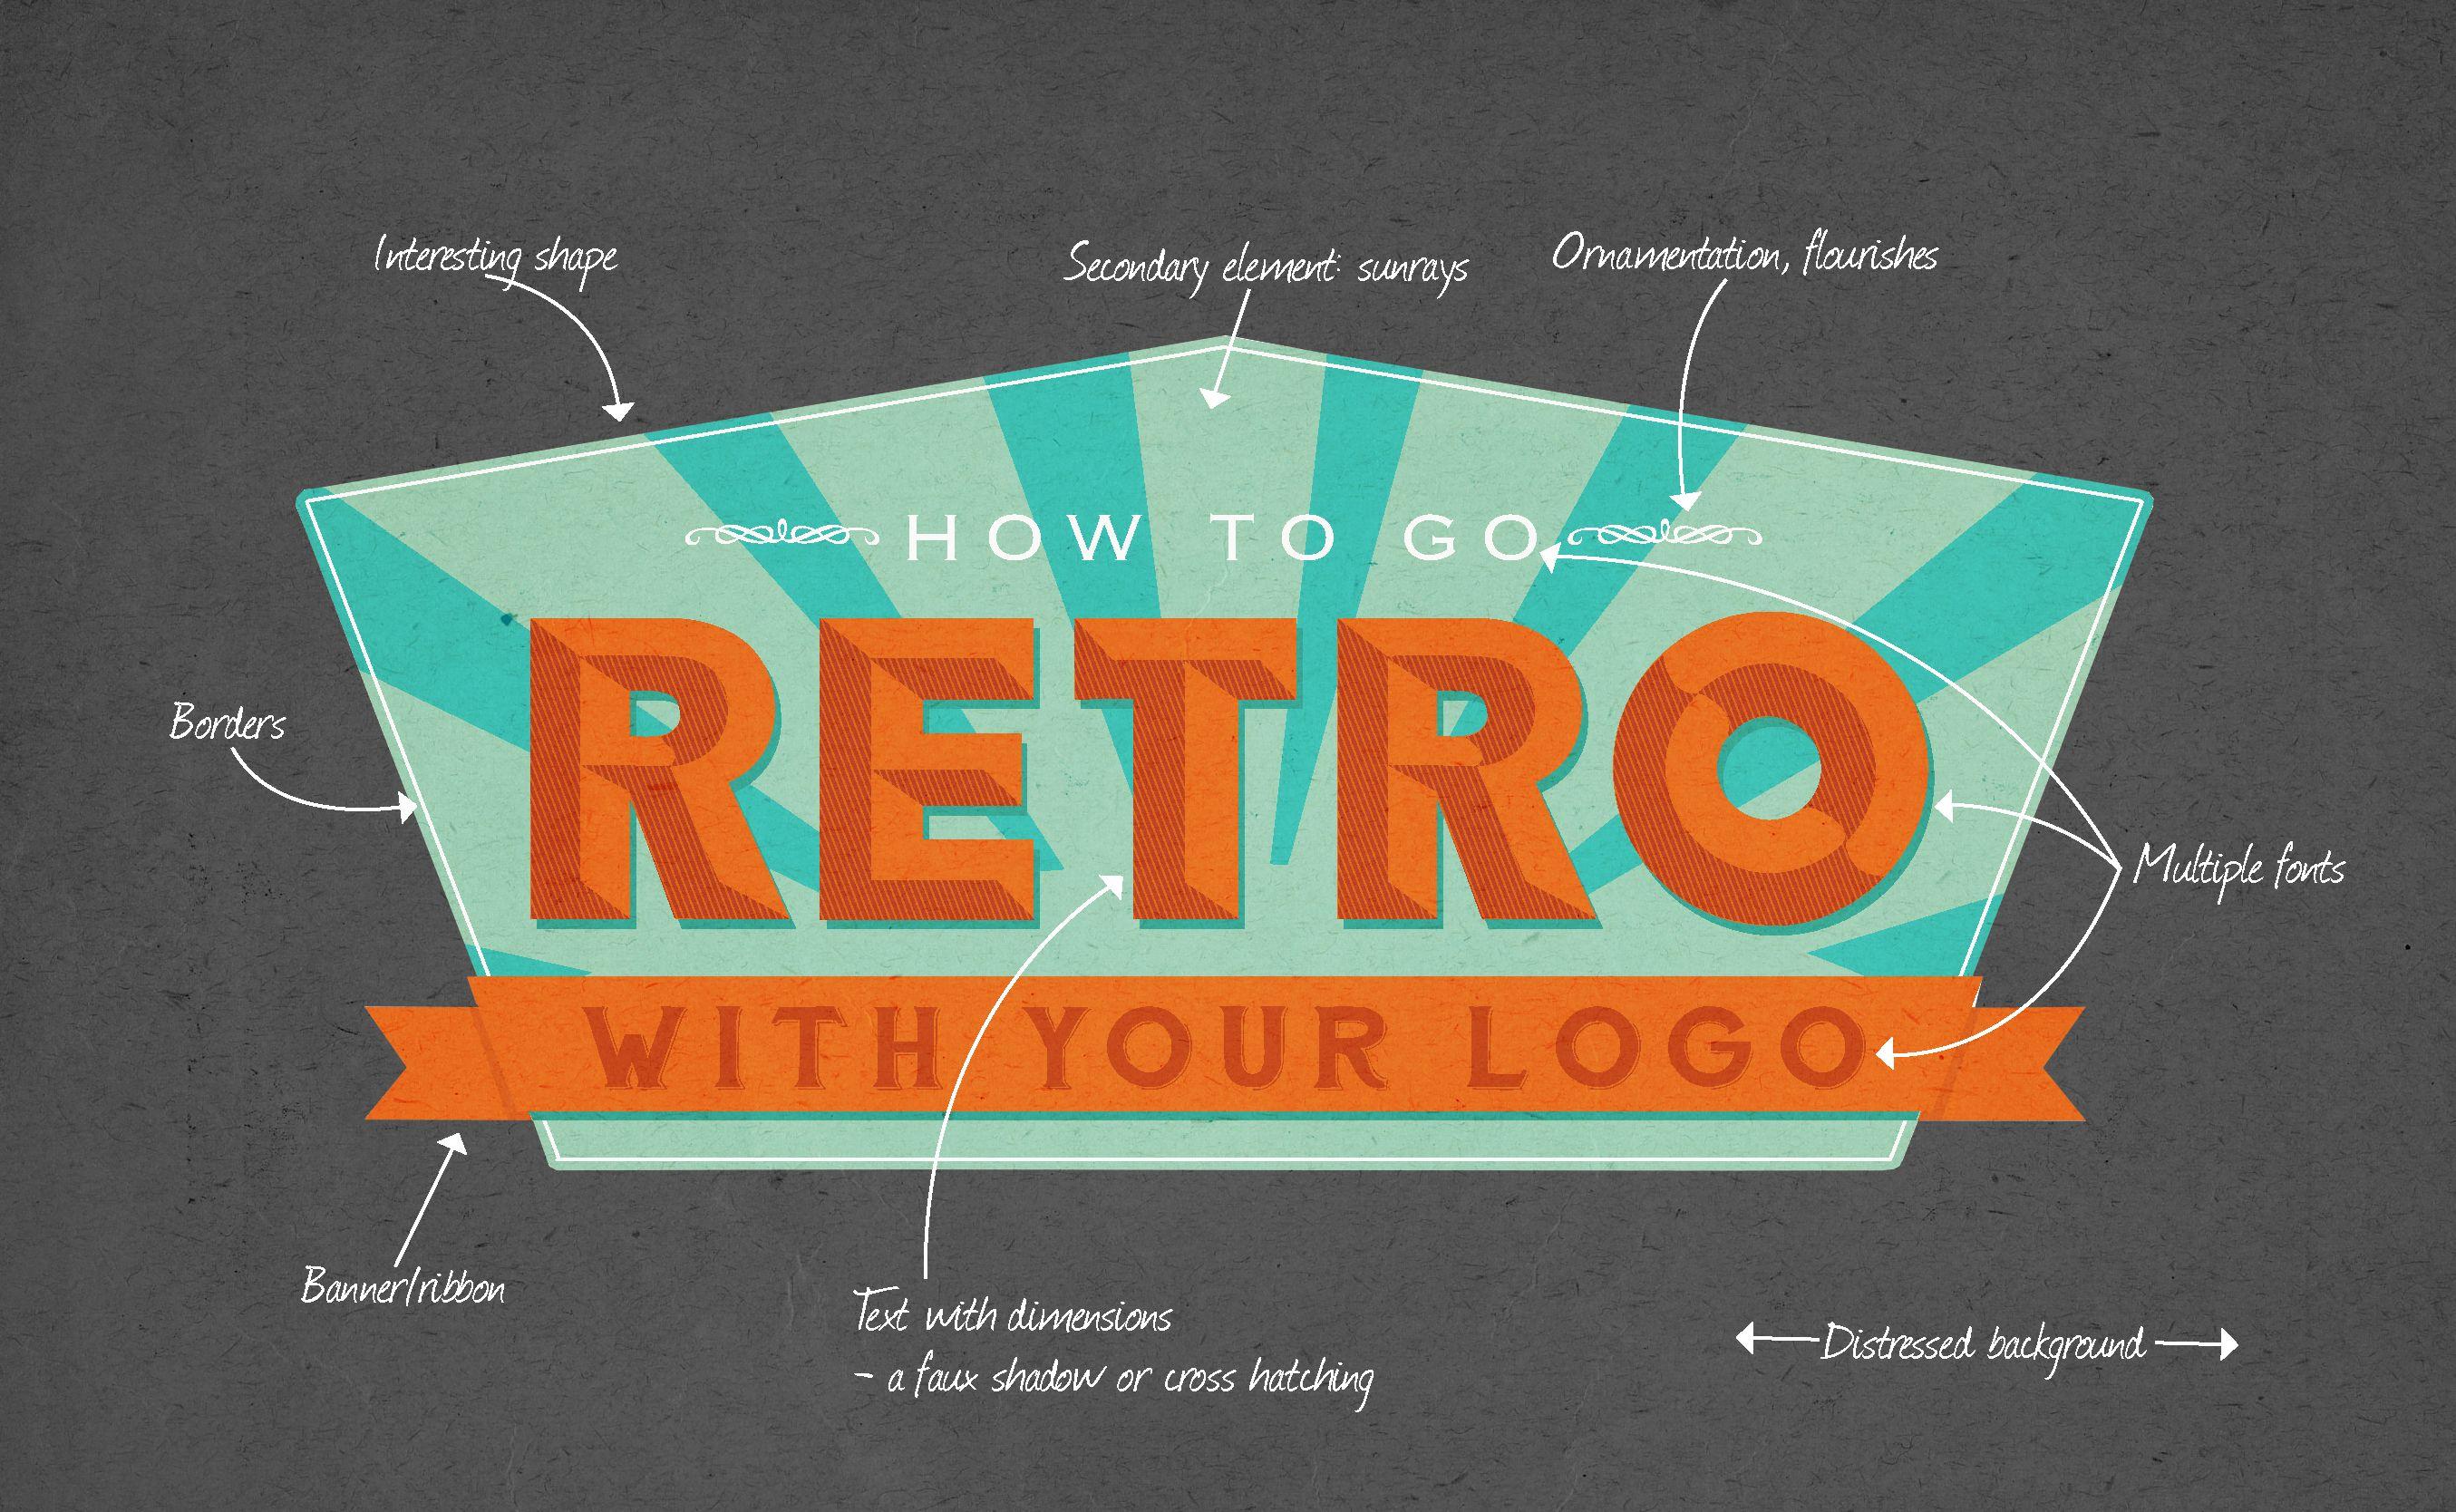 1950s Logo - Returning to retro with your logo